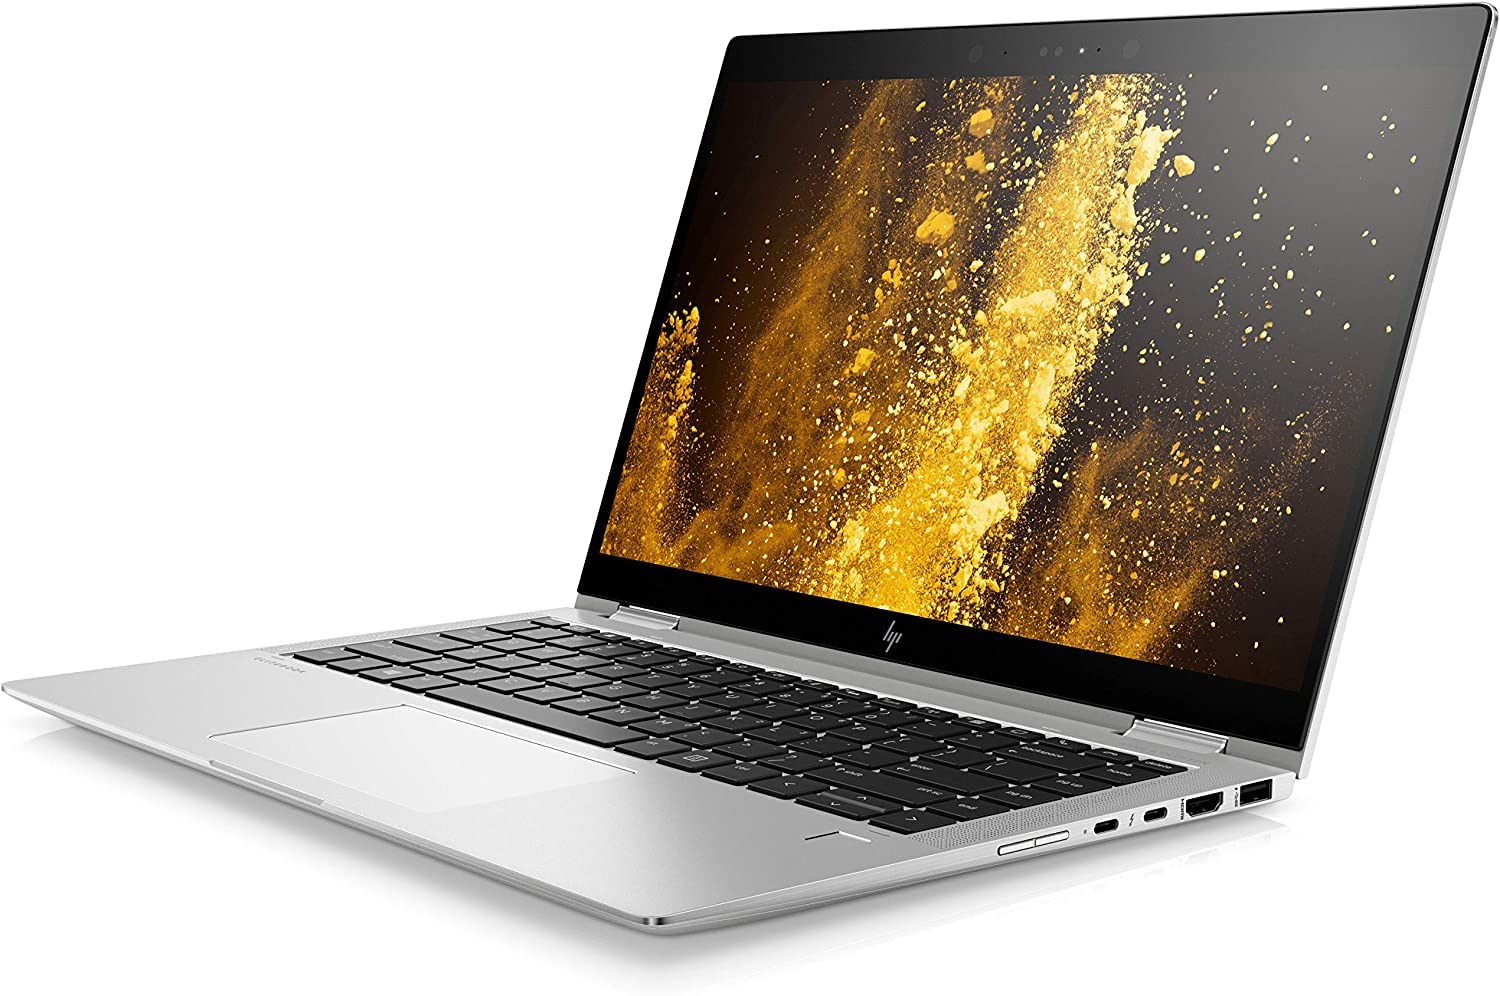 HP EliteBook x360 1040 G5 14" FHD 2in1 Convertible Touchscreen Laptop - i5-8250U, 8GB DDR4, 1TB SSD, Fingerprint Reader, WiFi 11ac & BT 4.2, Free Windows 11 Pro Upgrade, Backlit Keys (Renewed)